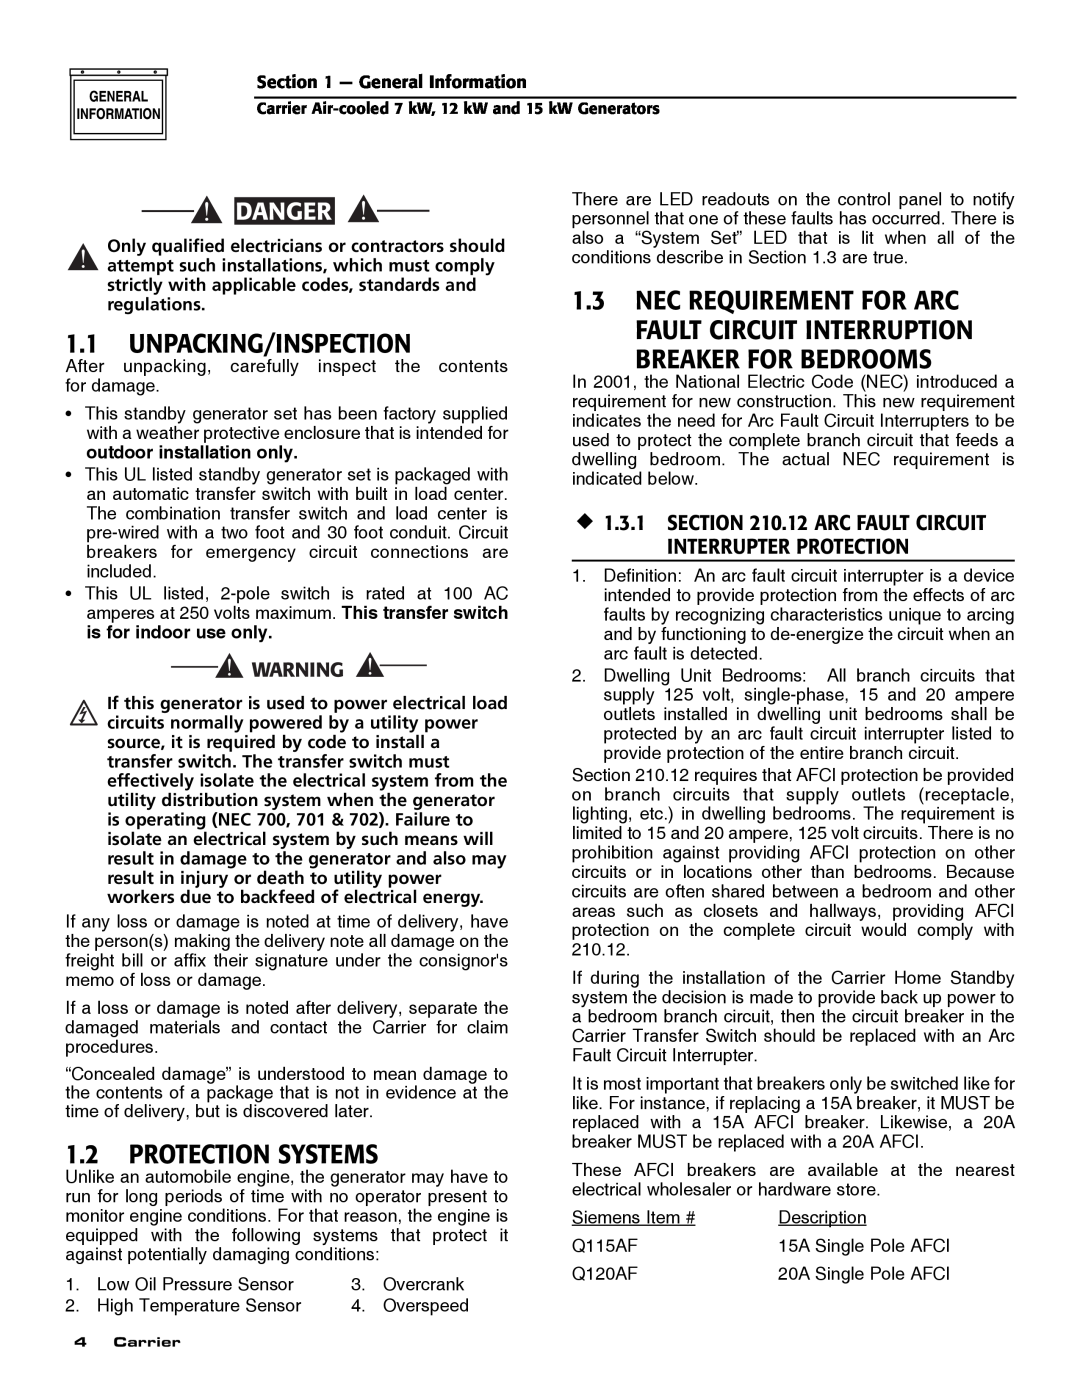 Carrier ASPAS1CCA007 owner manual 1.1UNPACKING/INSPECTION, 1.2PROTECTION SYSTEMS, Breaker For Bedrooms, Danger 